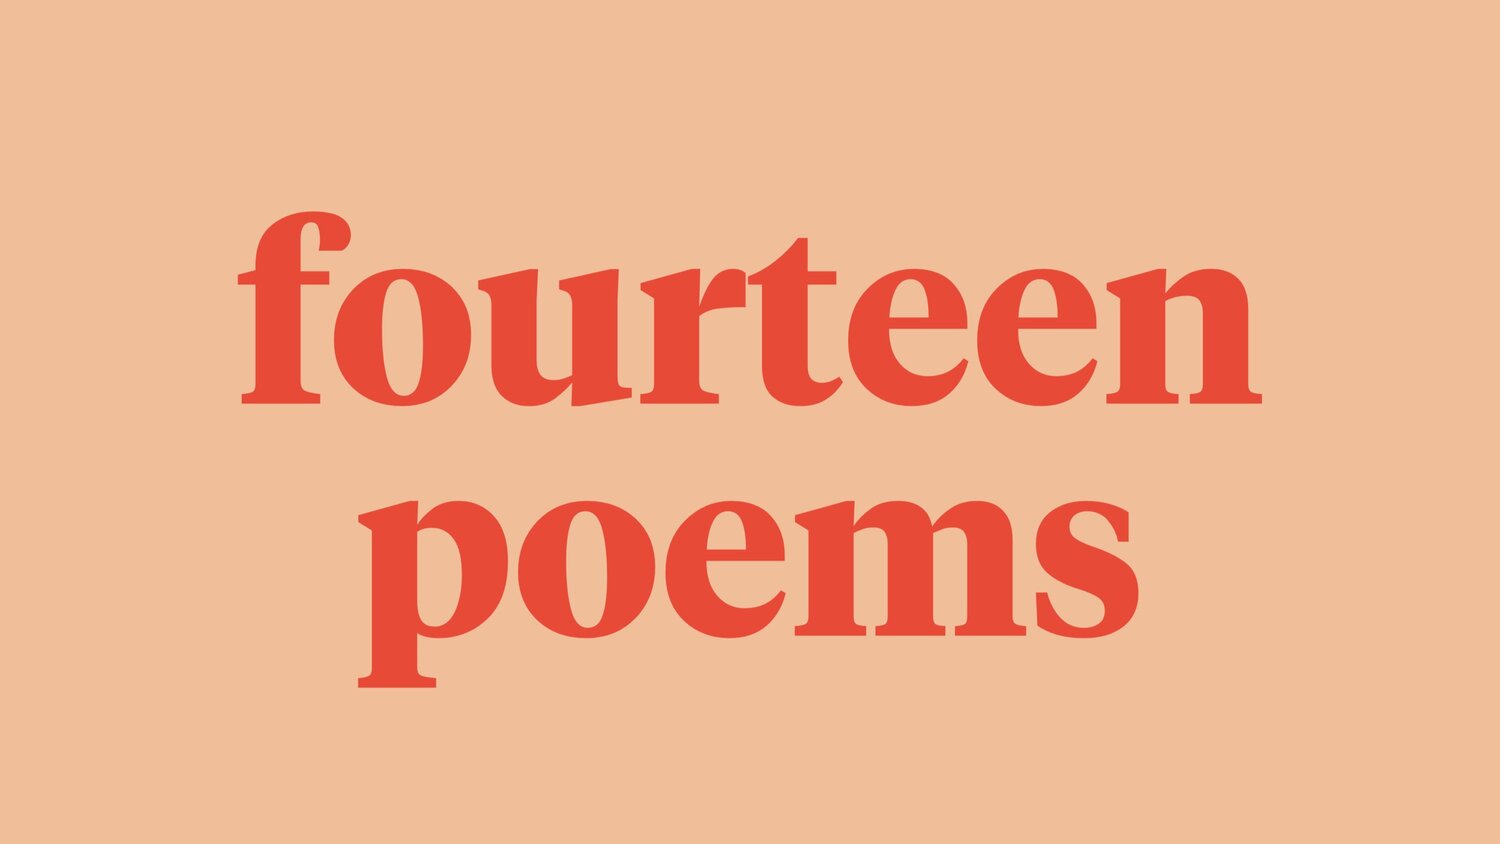 fourteen poems